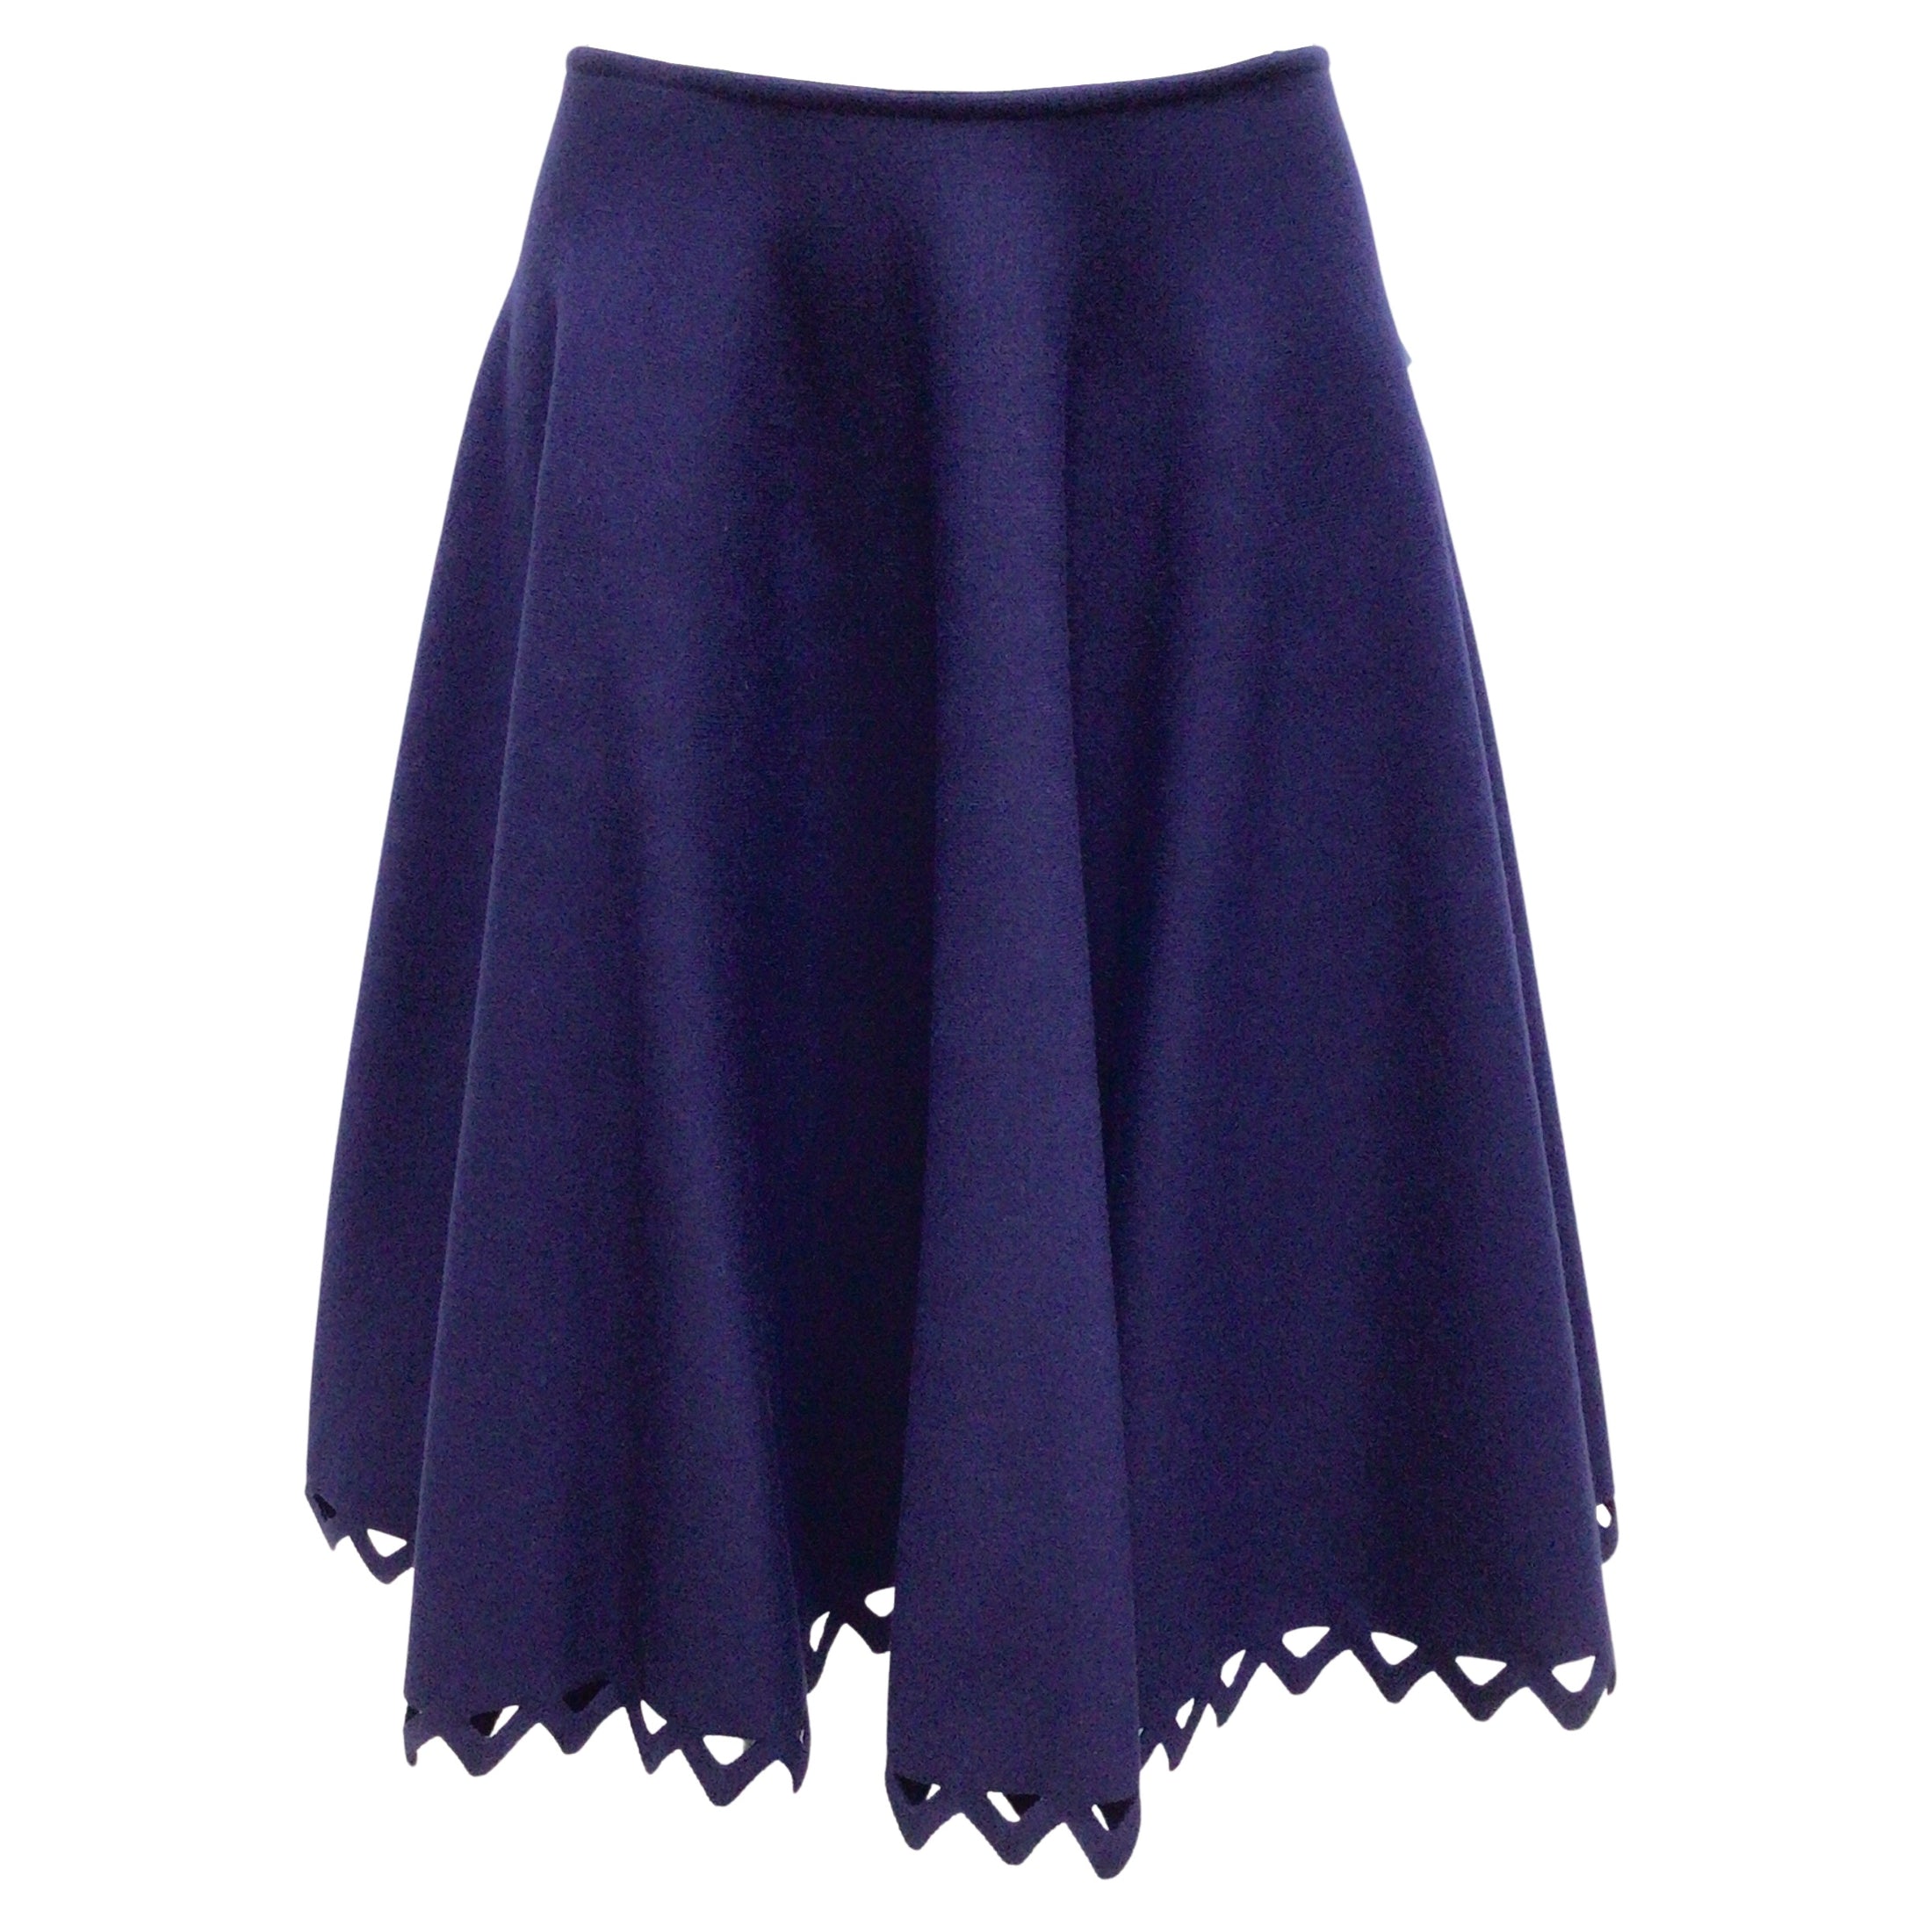 Alaia Paris Trigone Indigo Purple Triangle Cut-Out Detail Wool Knit Flared A-Line Skirt